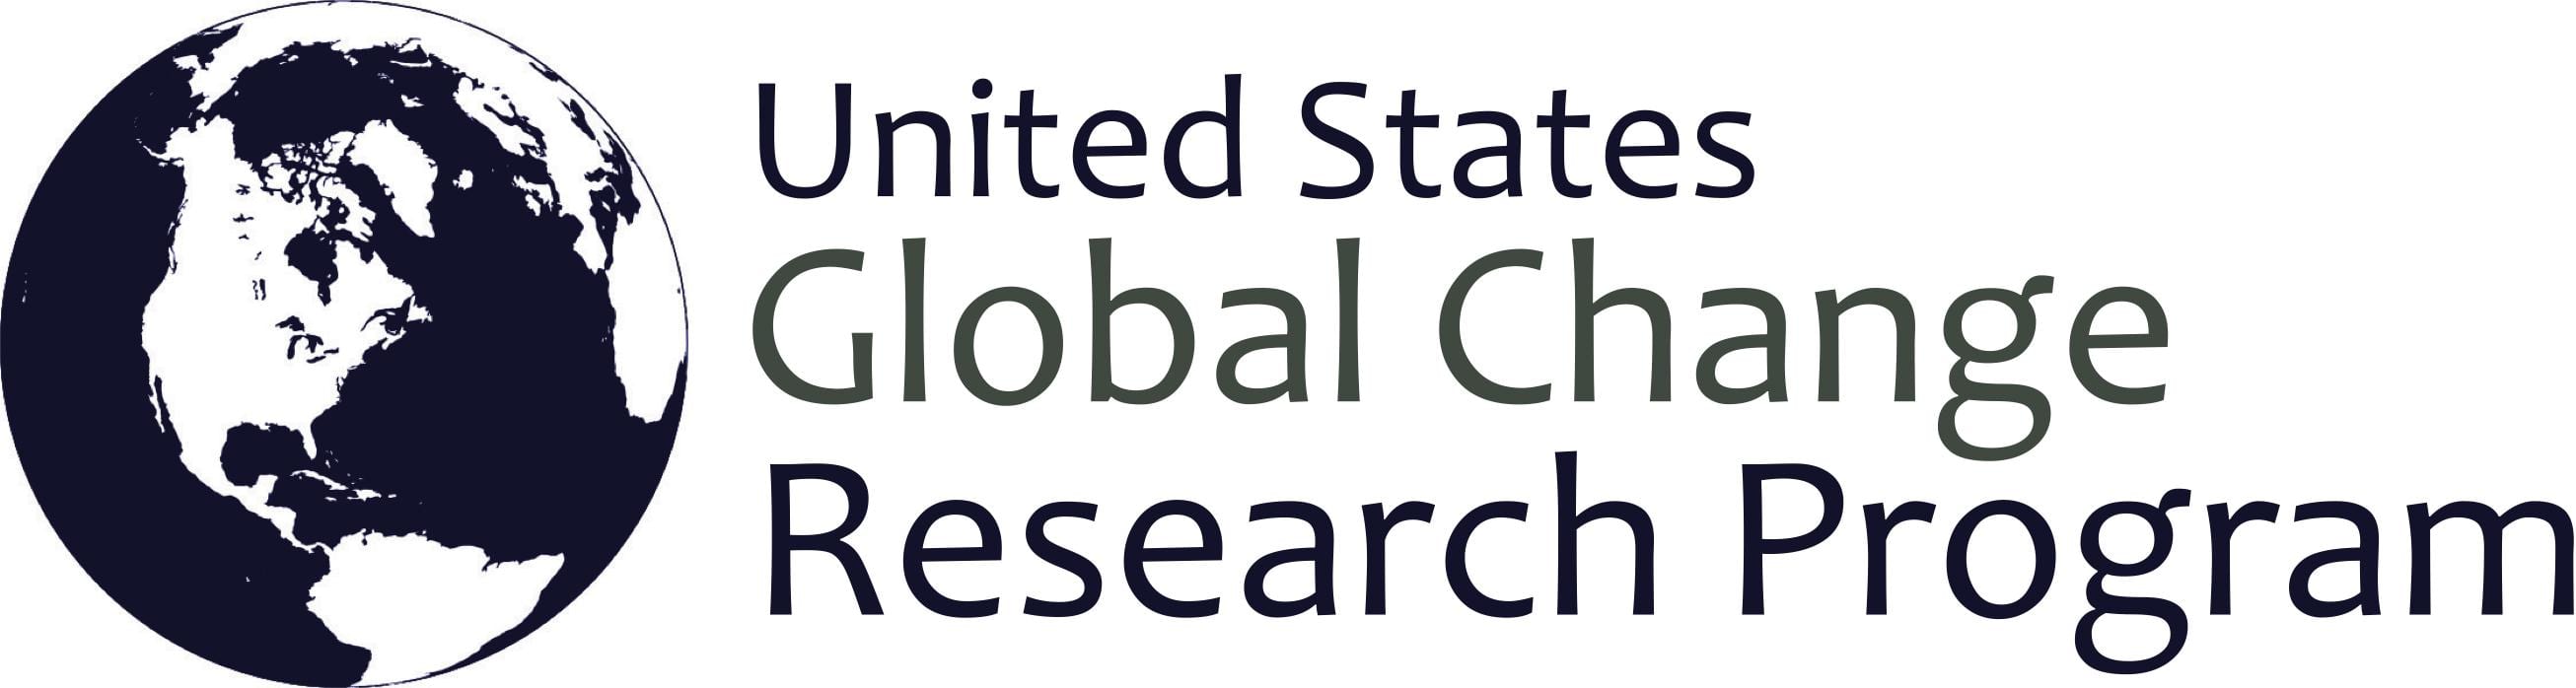 united states global change research program logo